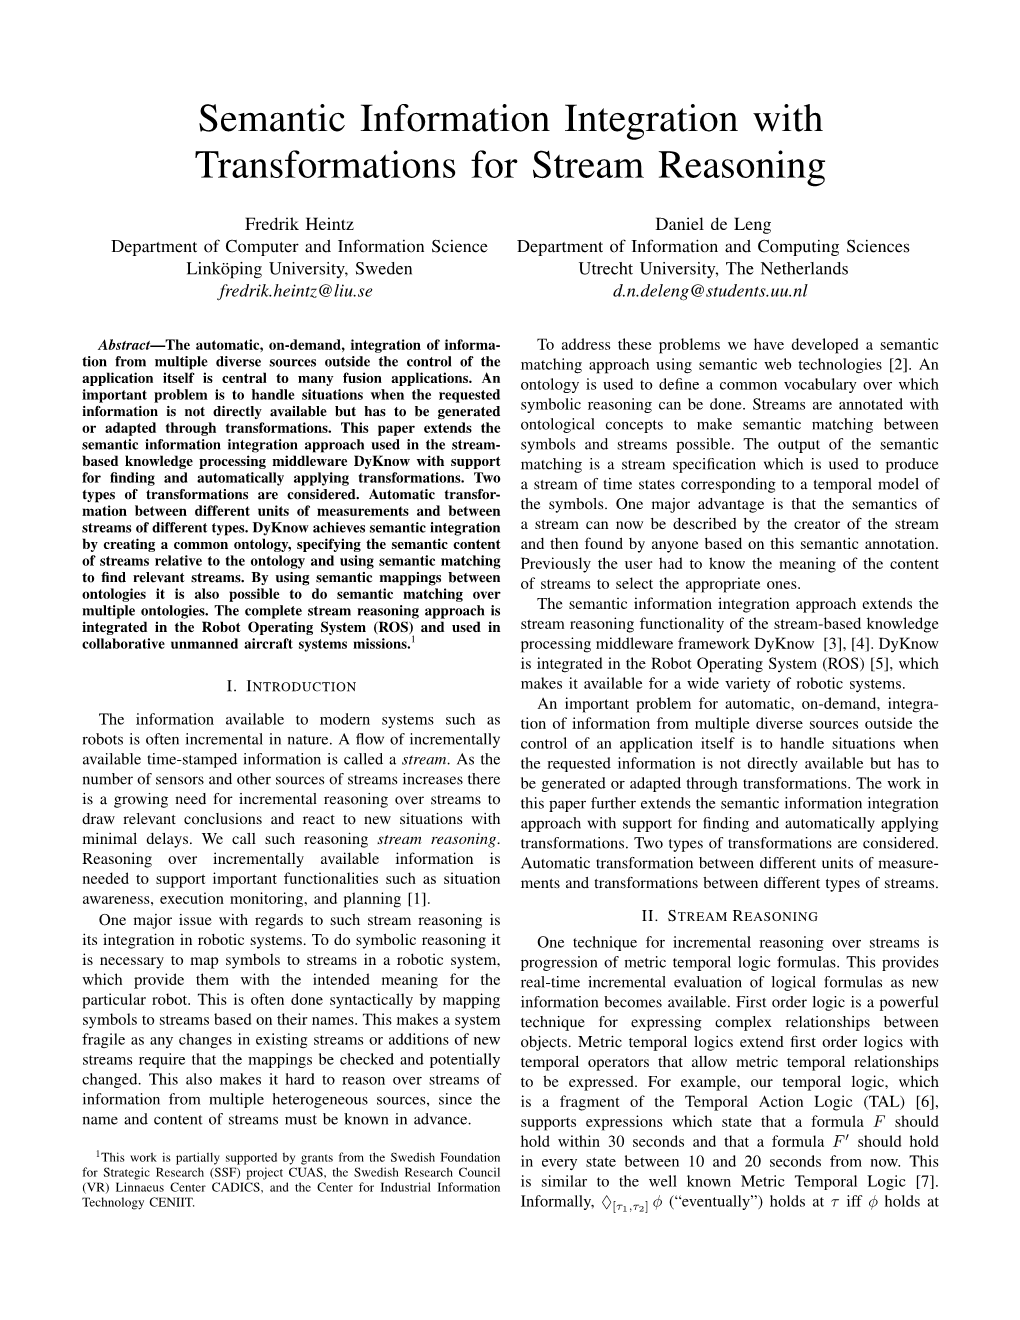 Semantic Information Integration with Transformations for Stream Reasoning